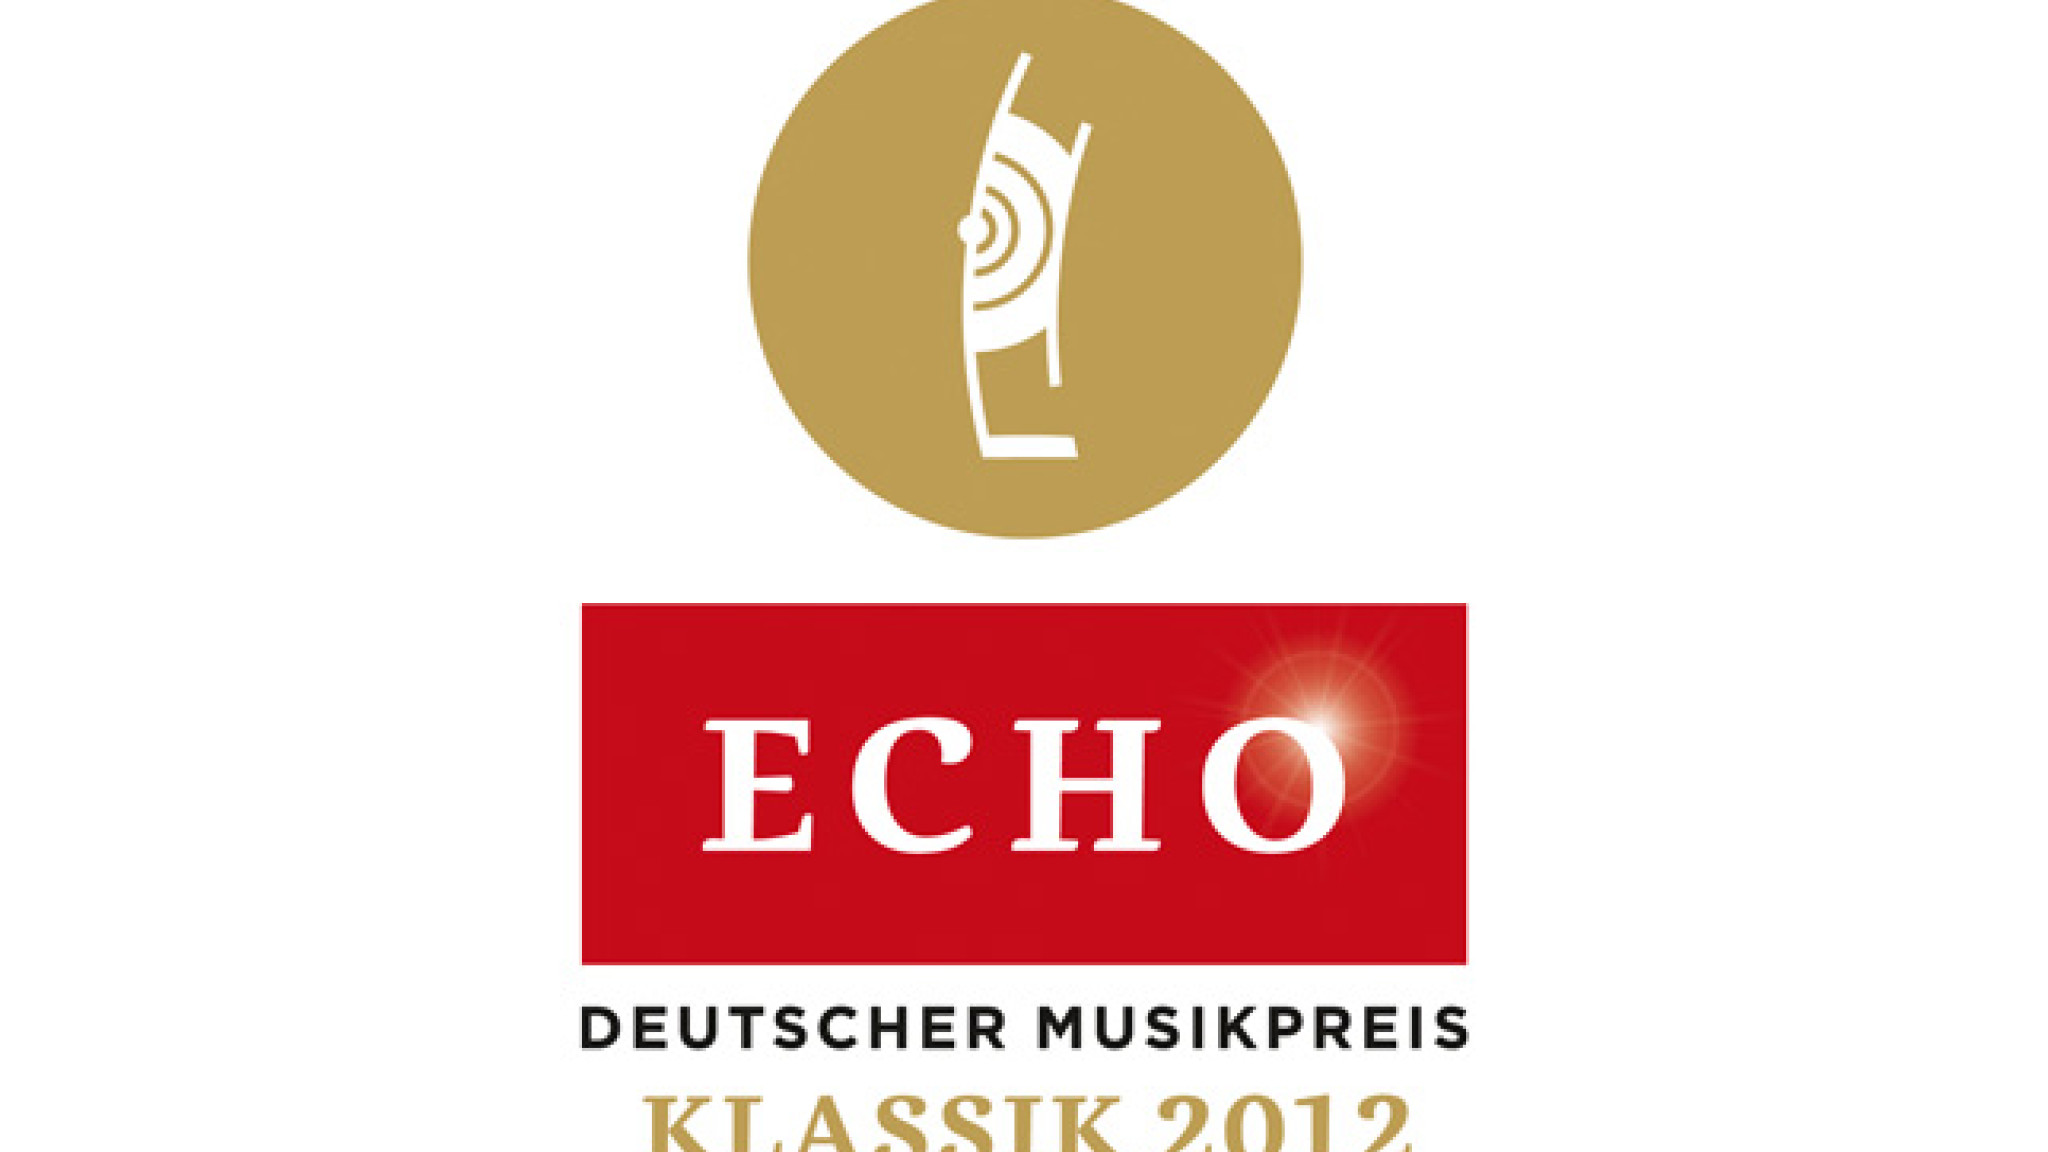 ECHO Klassik 2012: Universal Music gratuliert den Preisträgern